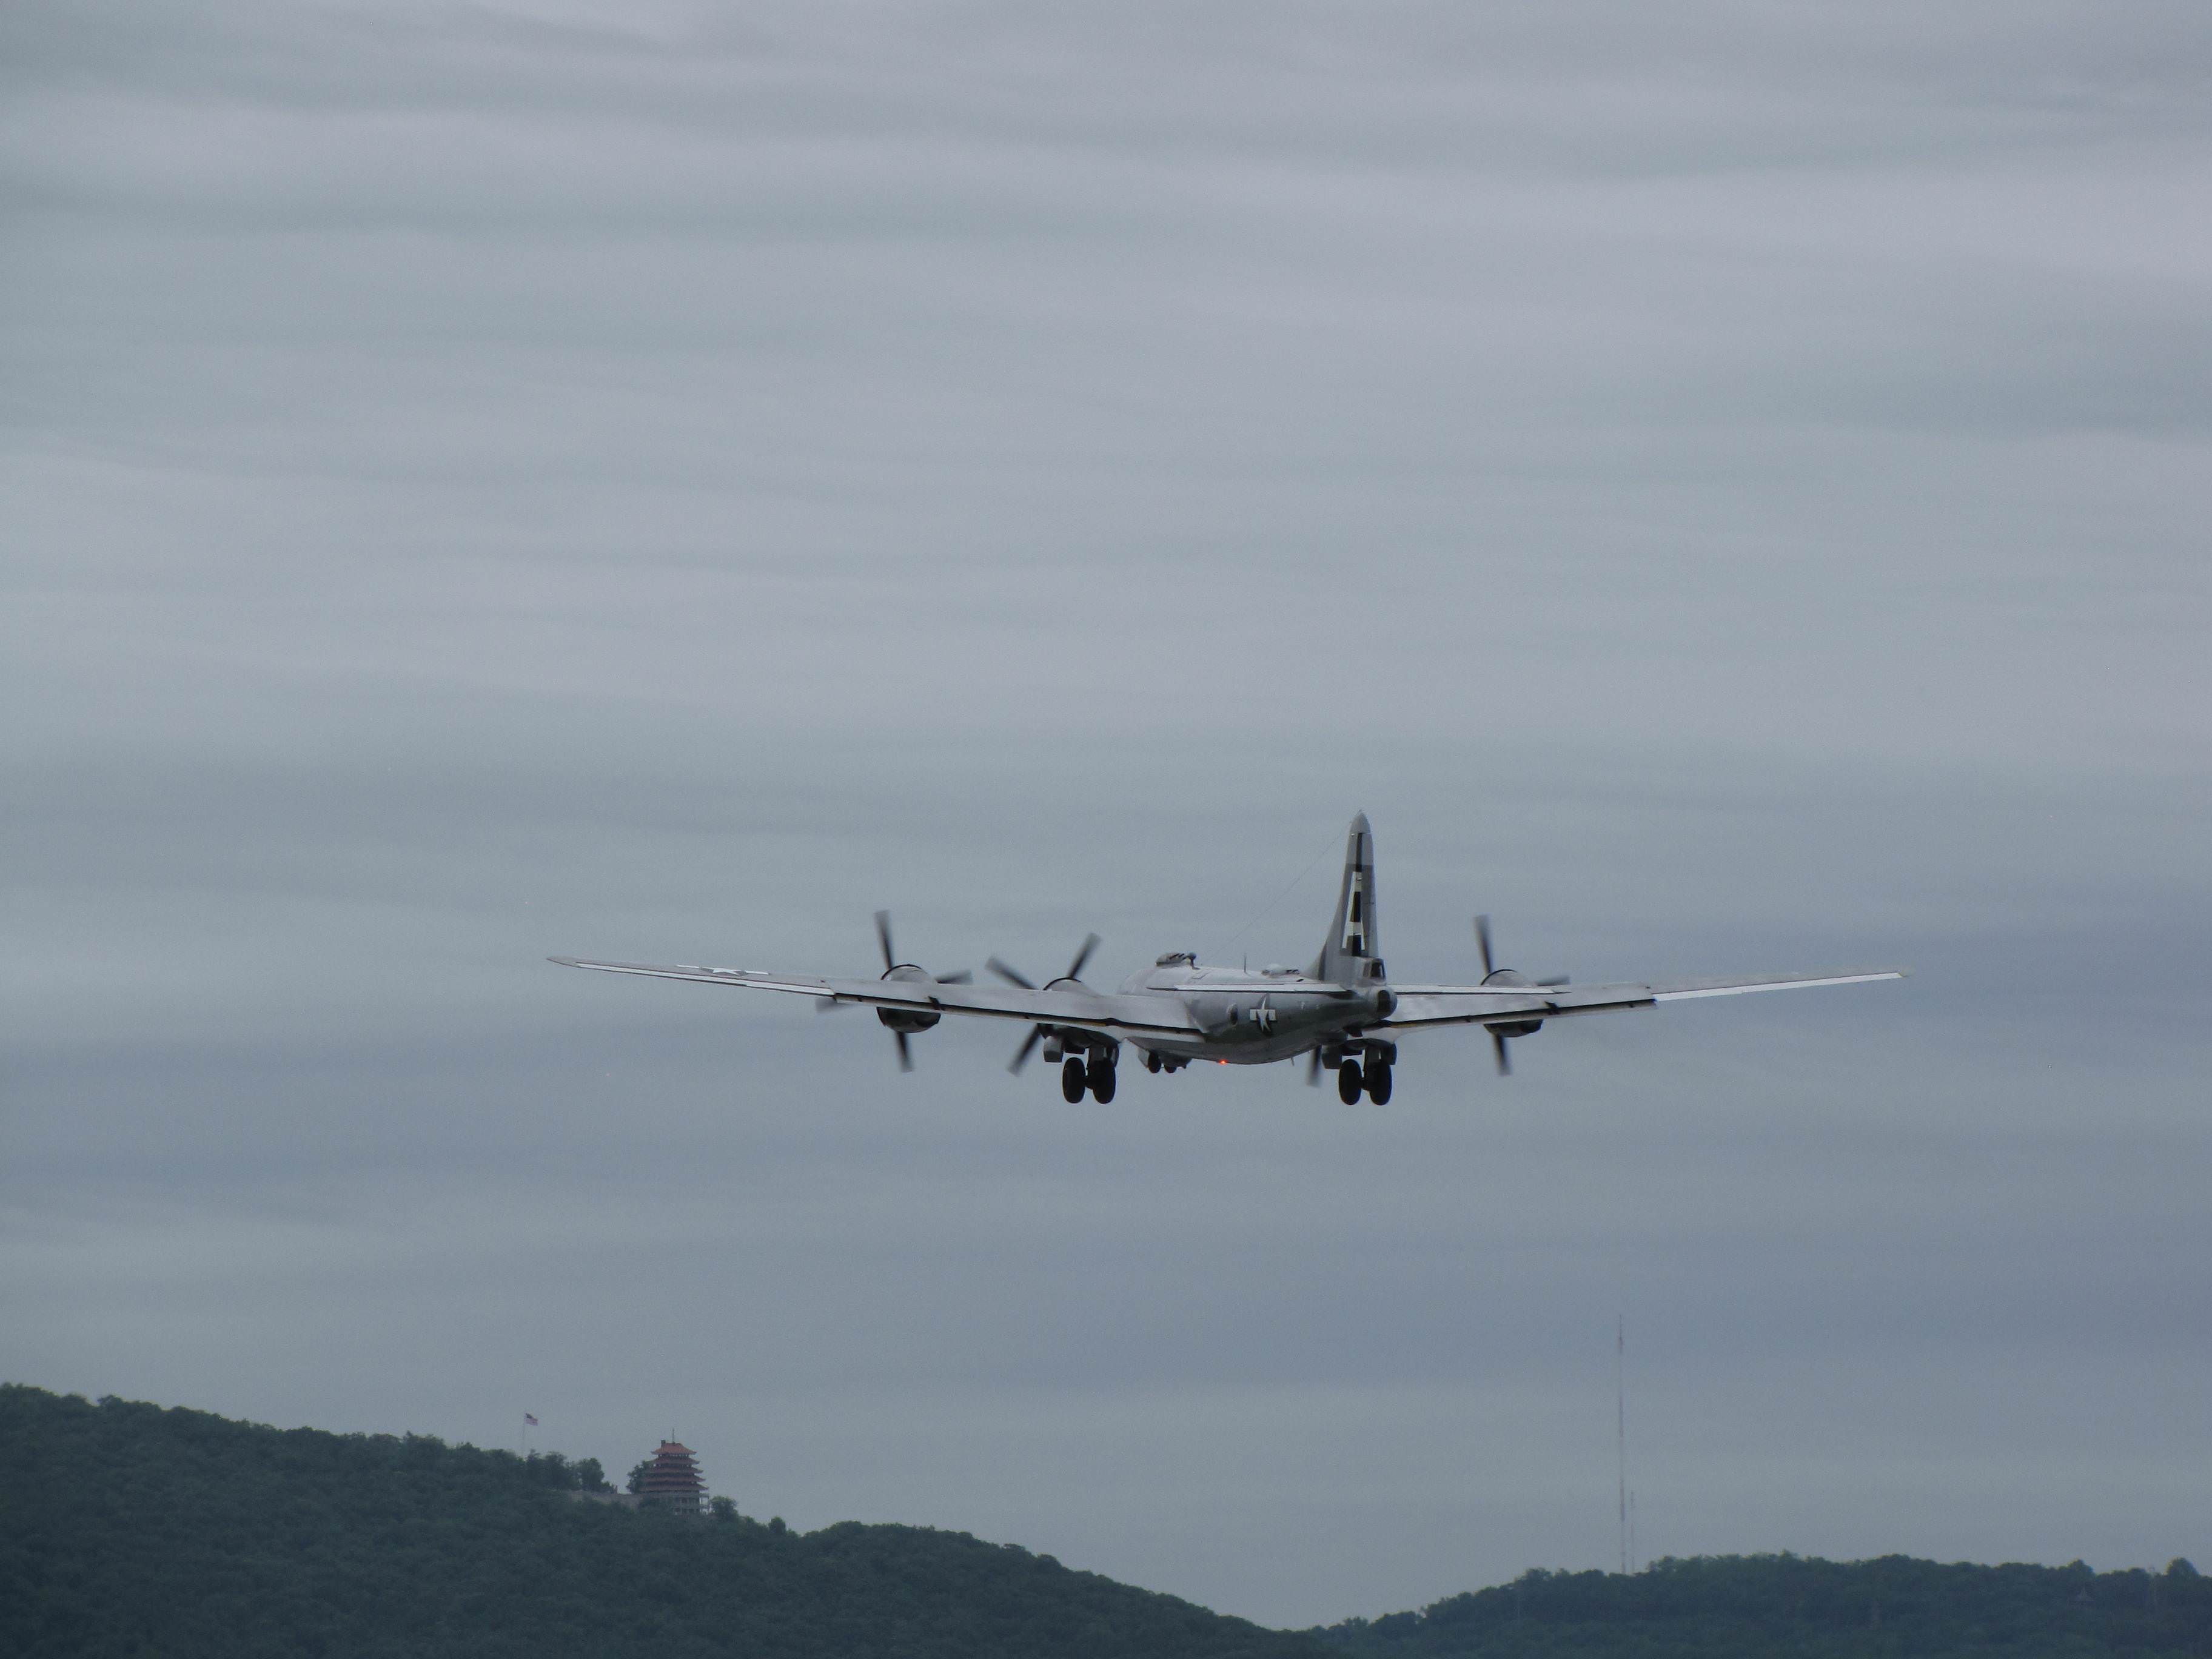 B-29 Superfortress bomber in flight, Reading Regional Airport, Pennsylvania, United States, 3 Jun 2018, photo 1 of 2